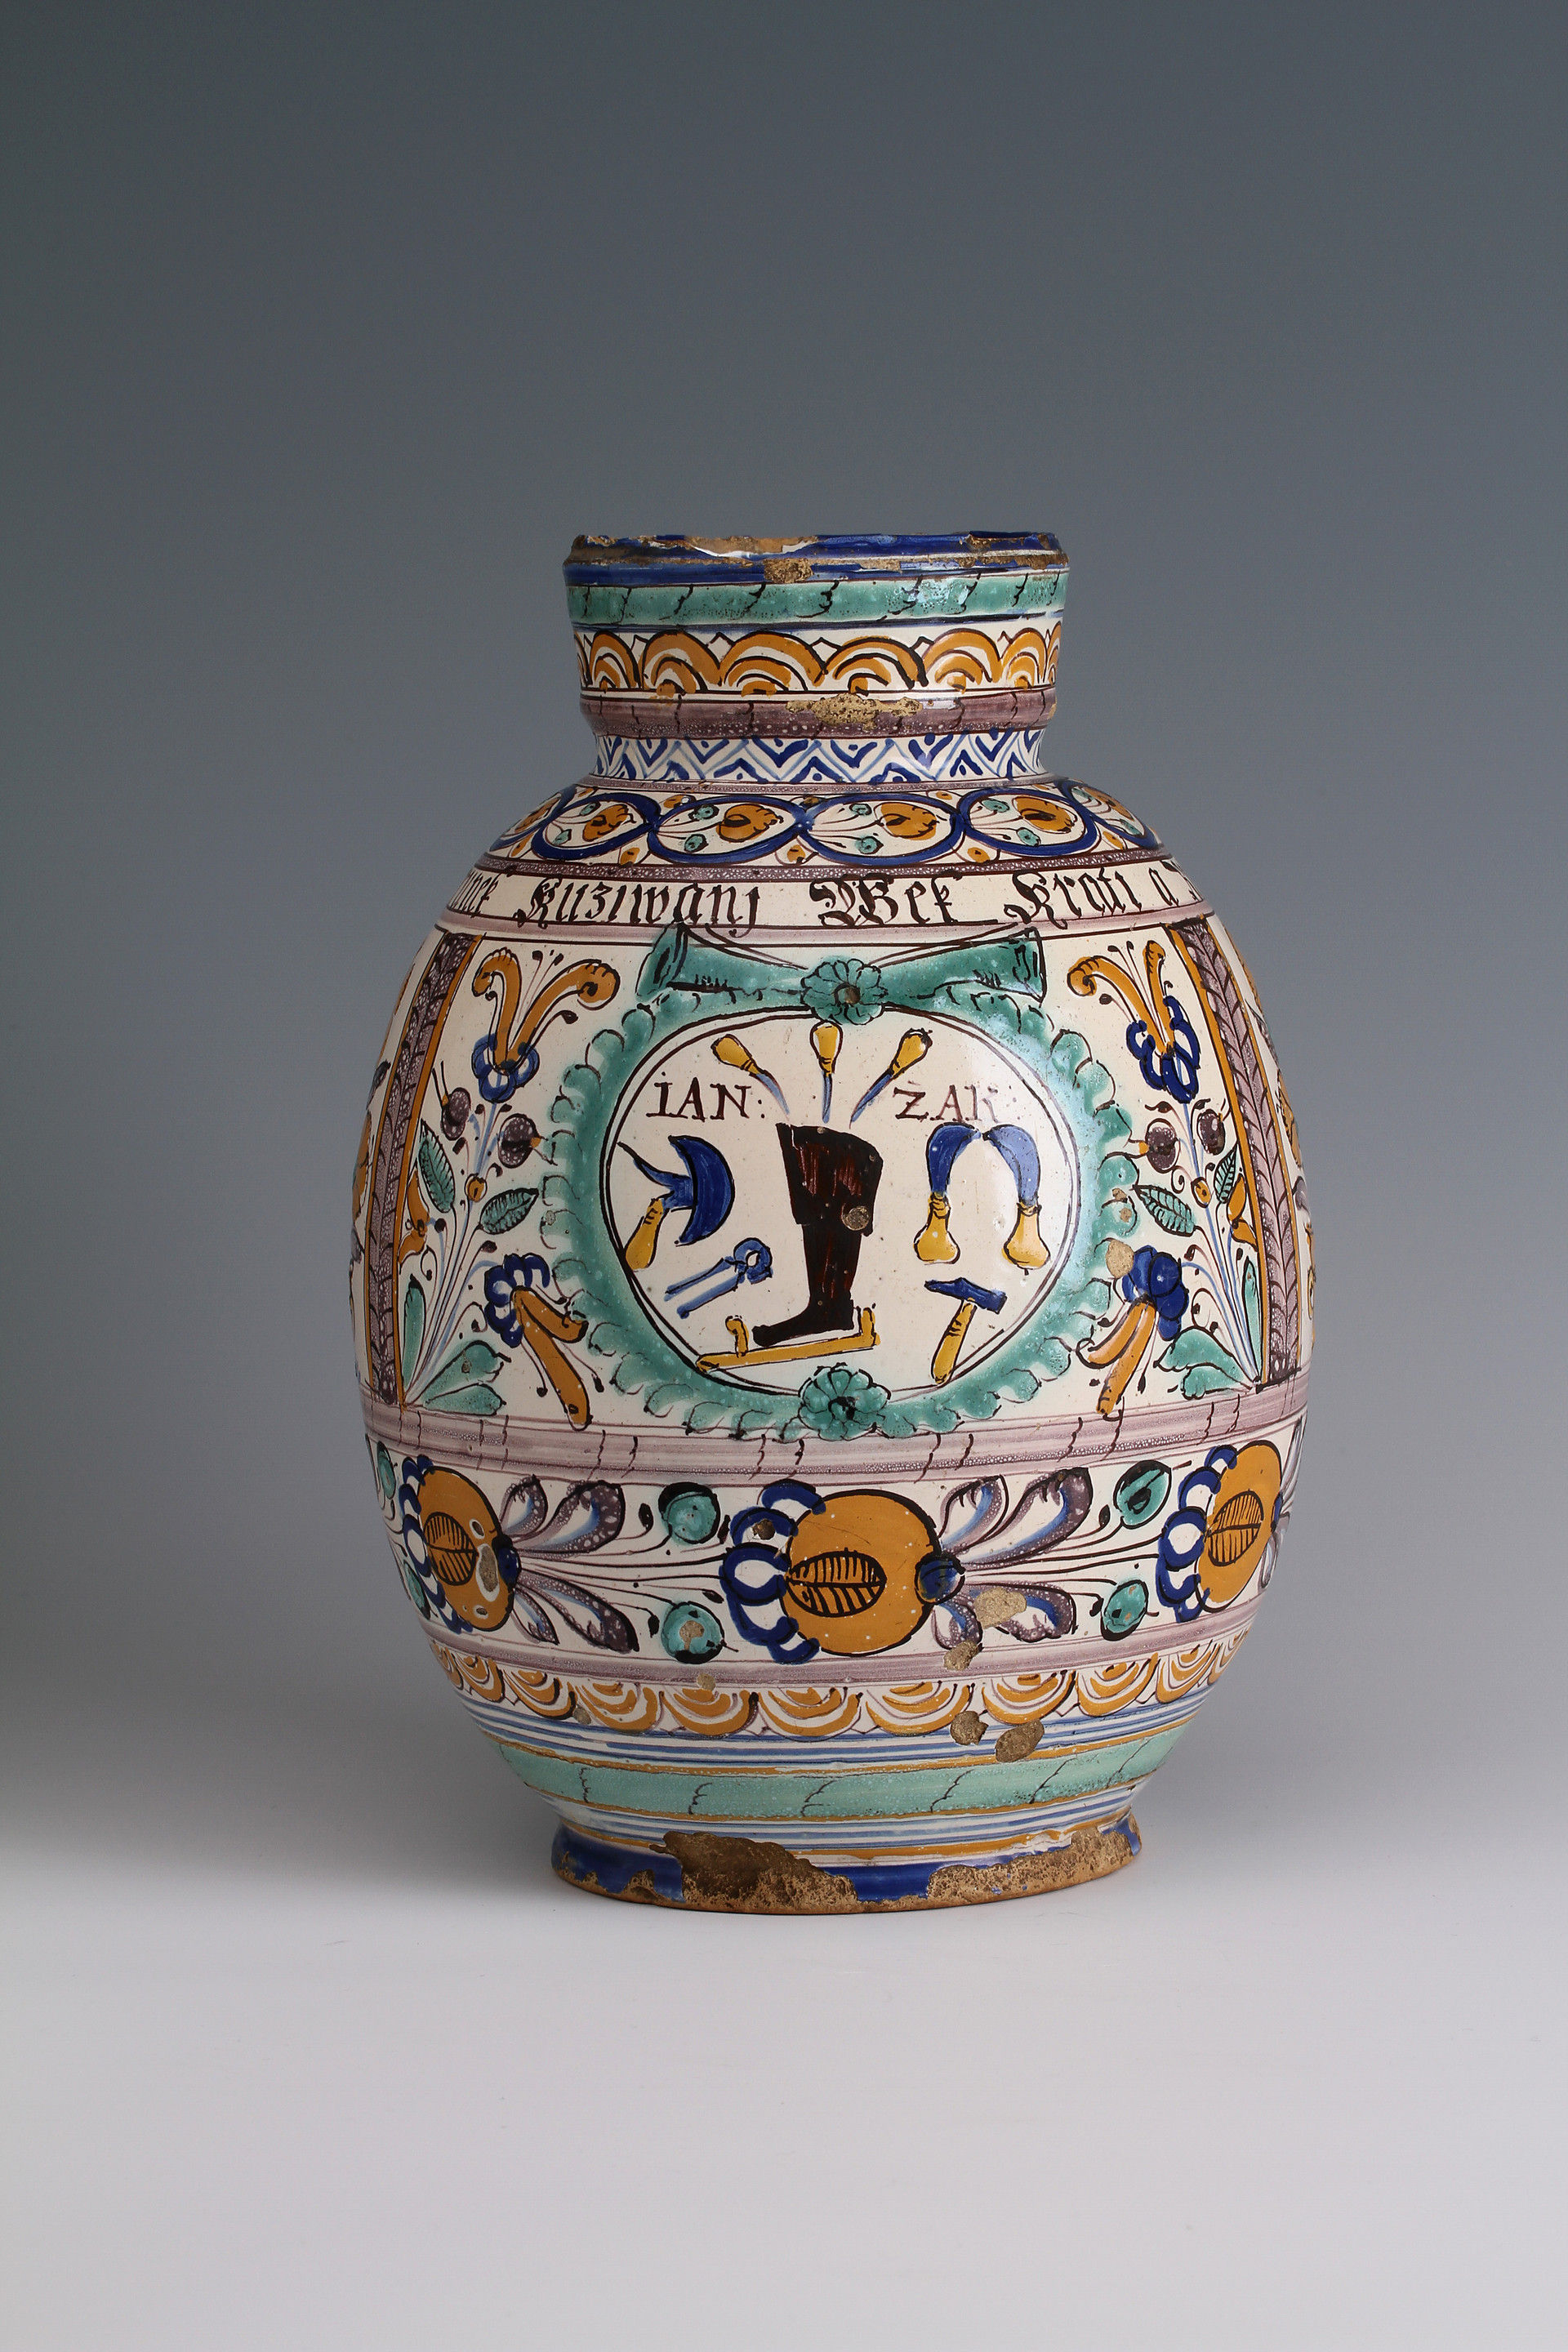 A Haban faience jug dated 1730